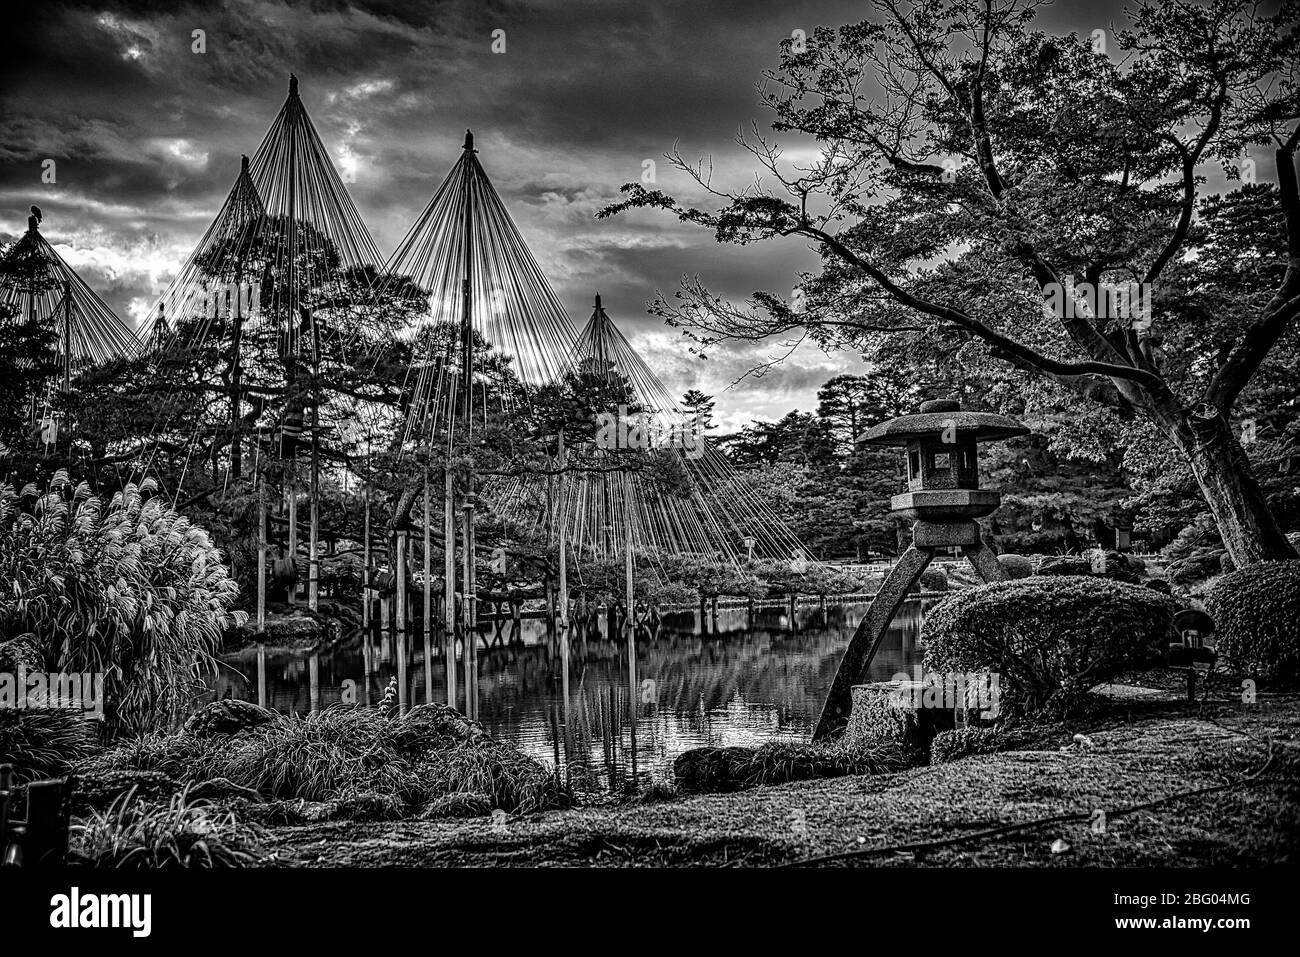 Kasumi pond, Kenroku-en Garden in Kanazawa, Japan. Stock Photo